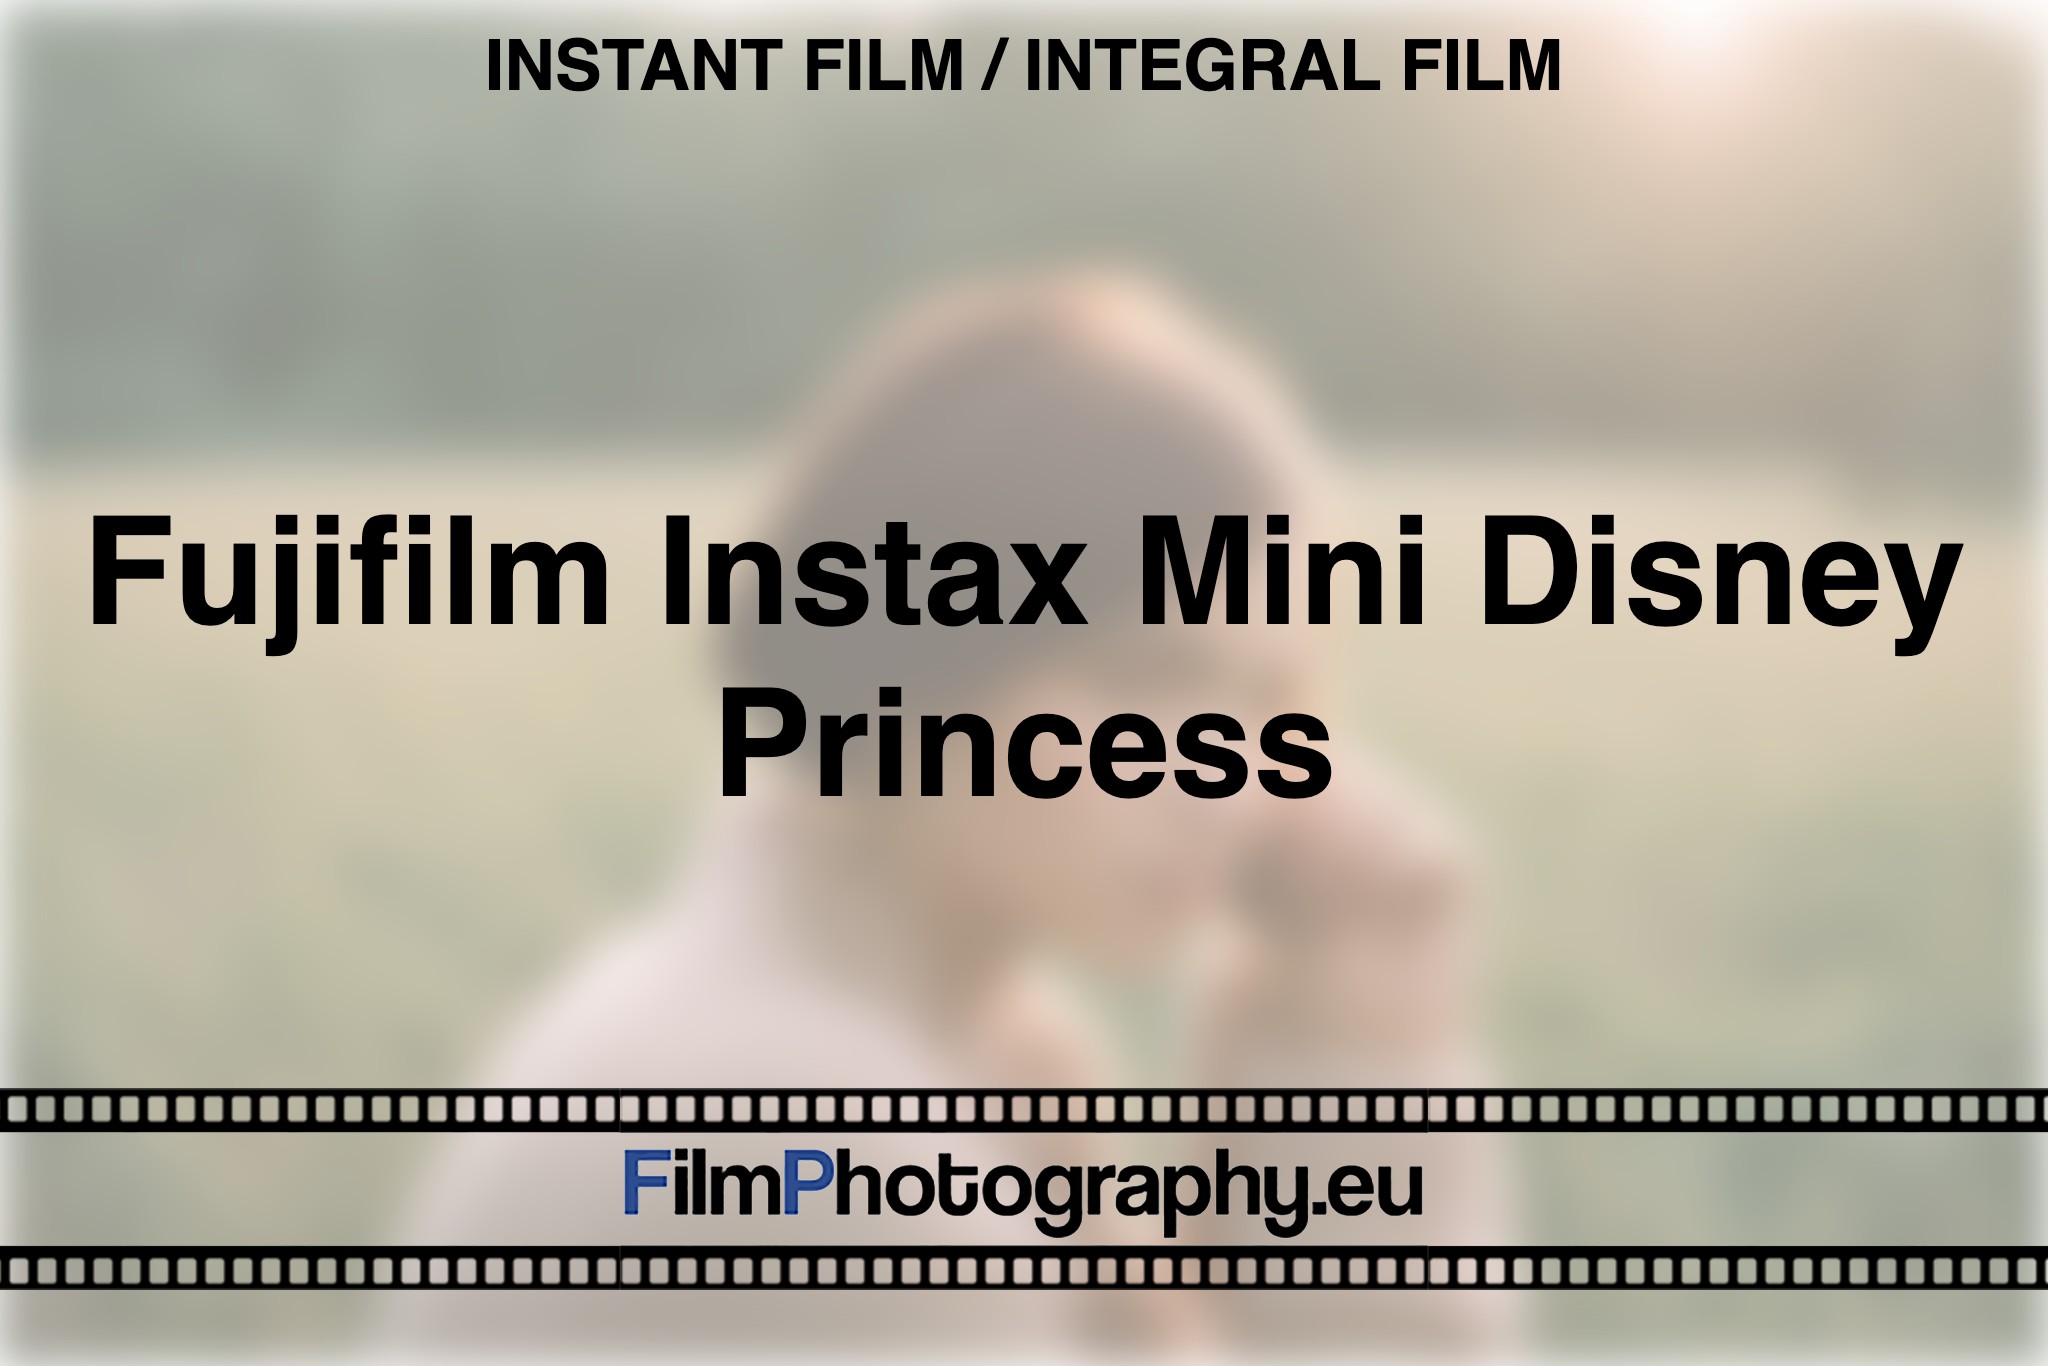 fujifilm-instax-mini-disney-princess-instant-film-integral-film-bnv